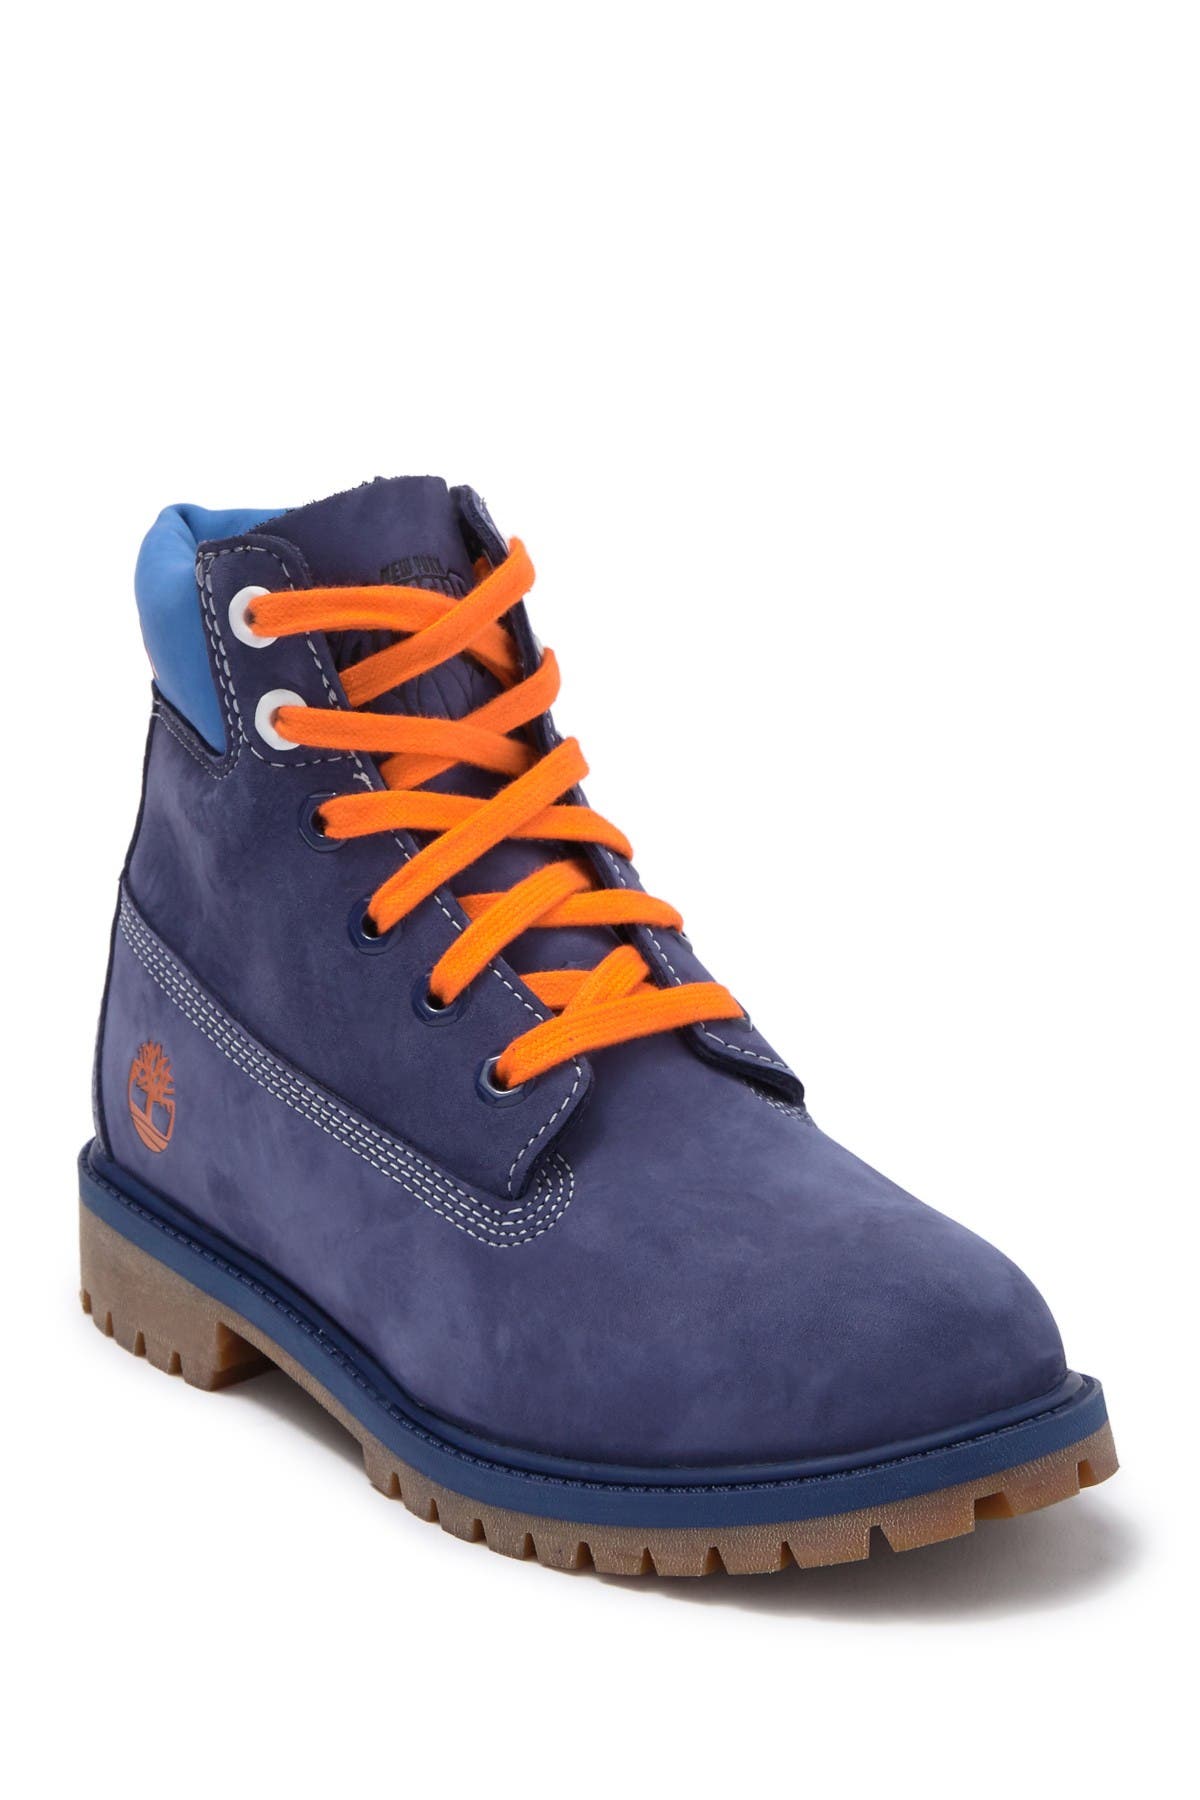 timberland boots dark blue